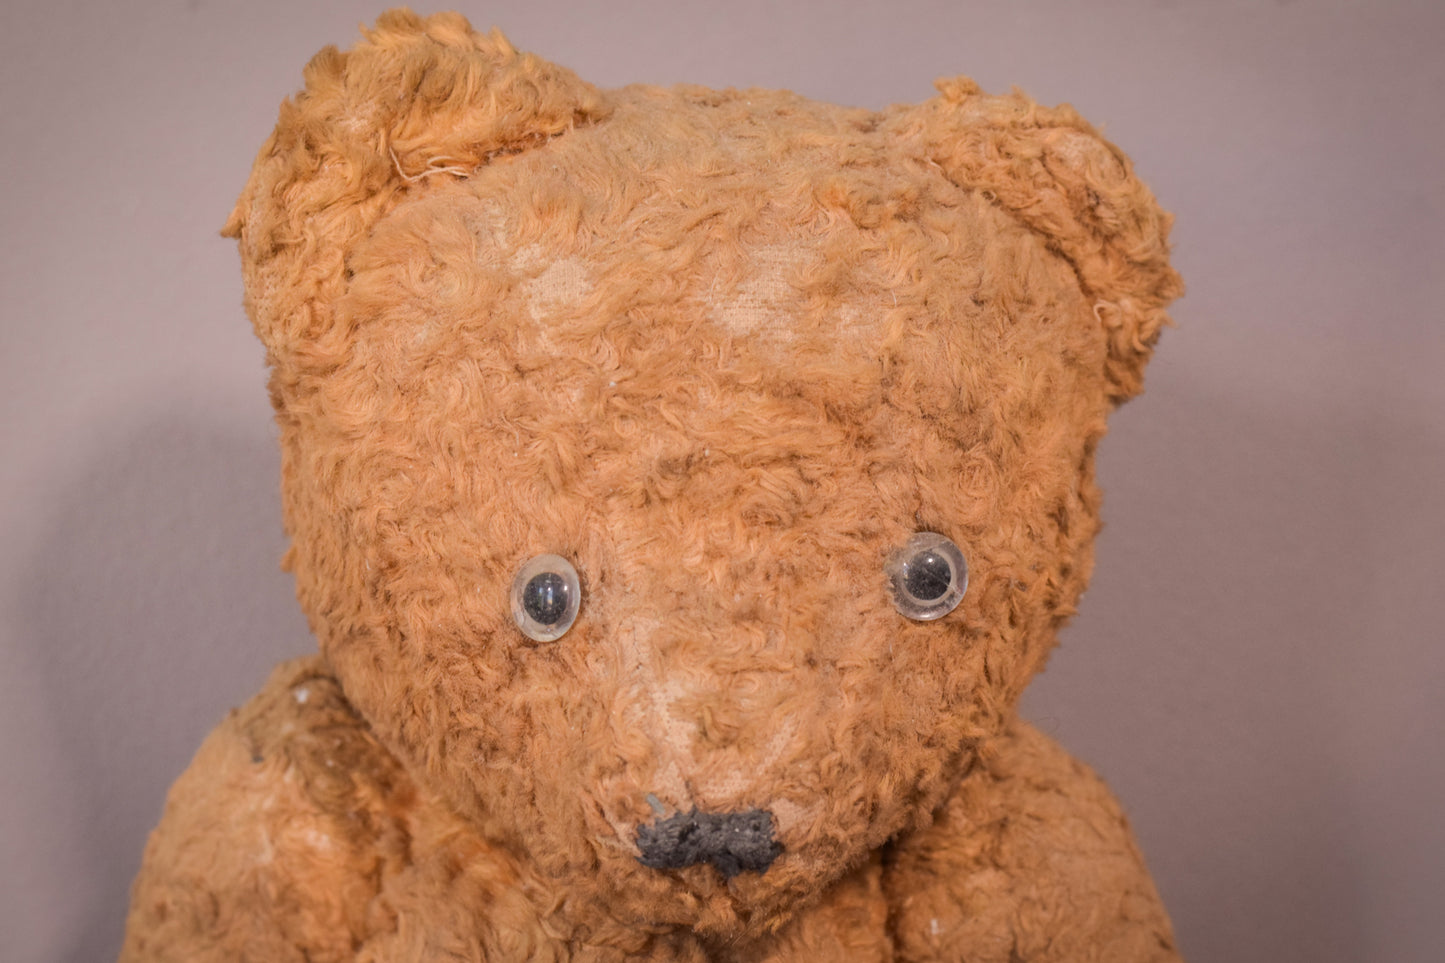 Antique teddy bear